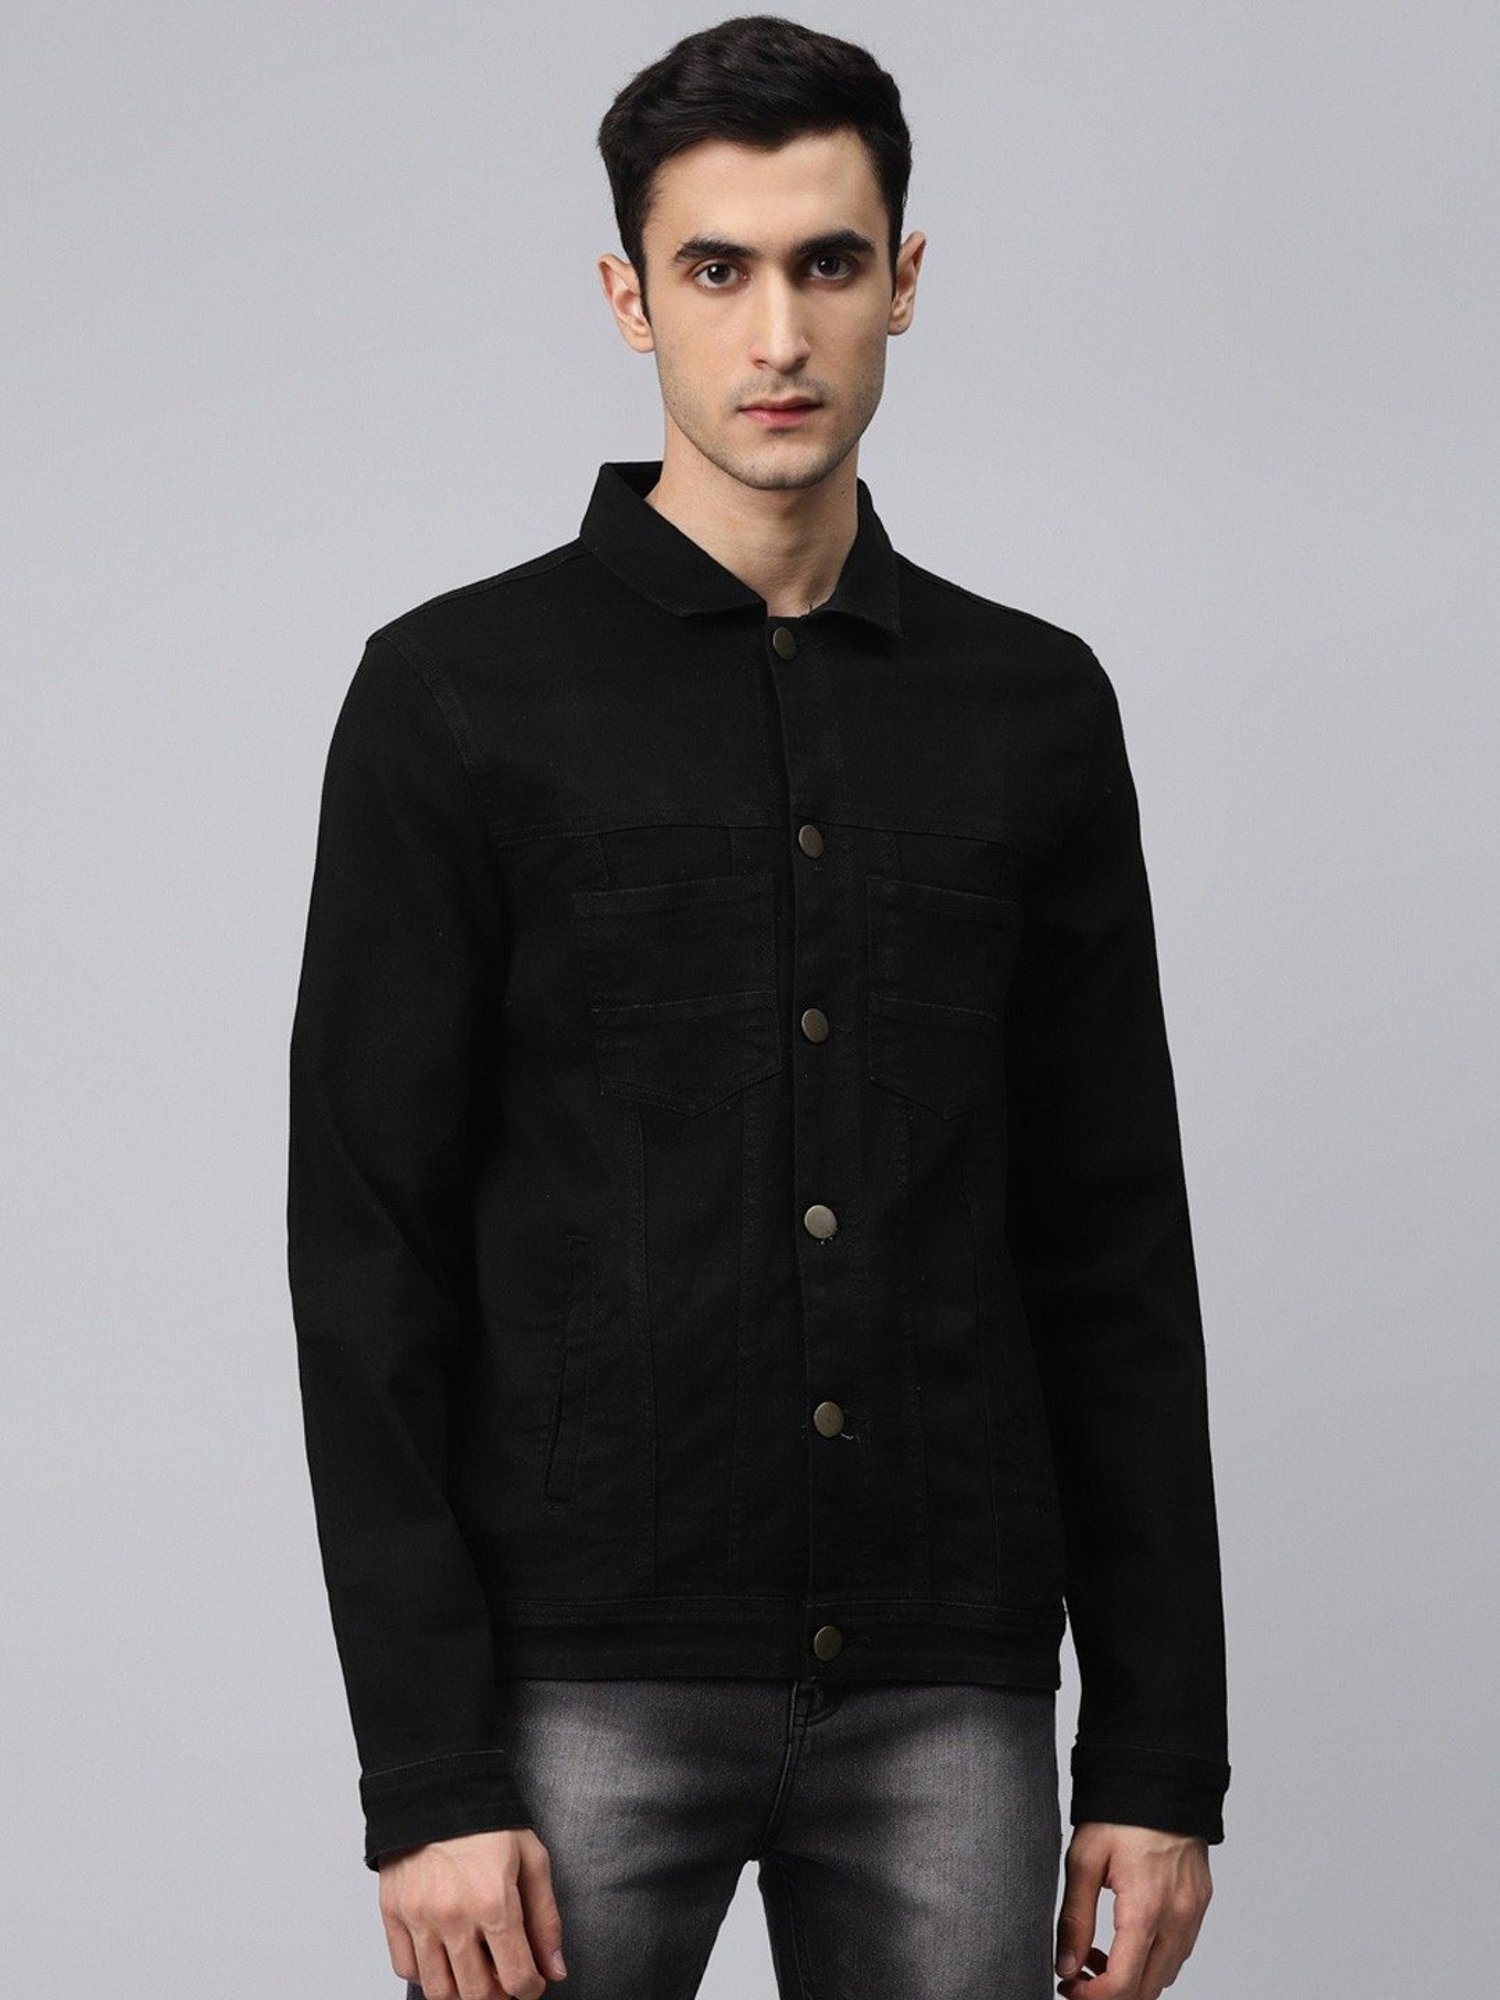 33 Best Black Denim Jacket ideas | black denim jacket, mens outfits, denim  jacket men